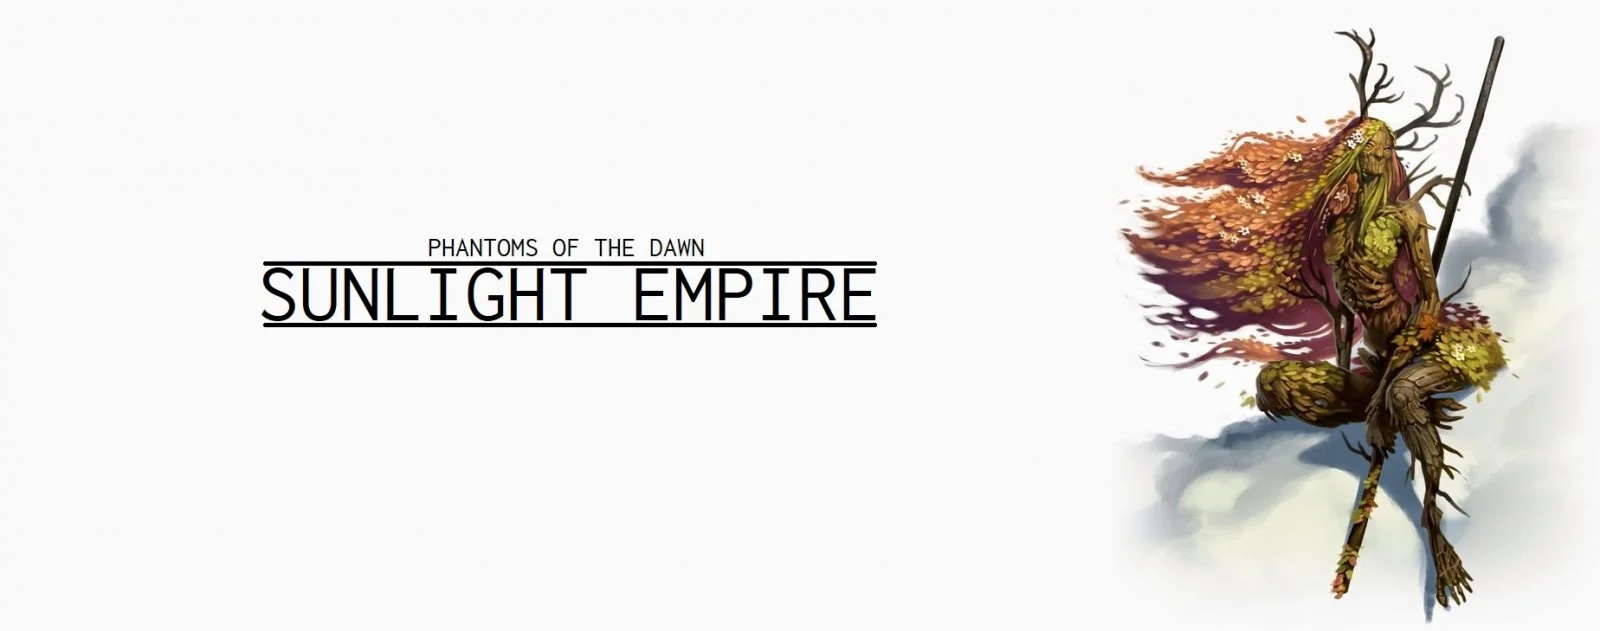 Sunlight Empire [v0.3.3beta] main image